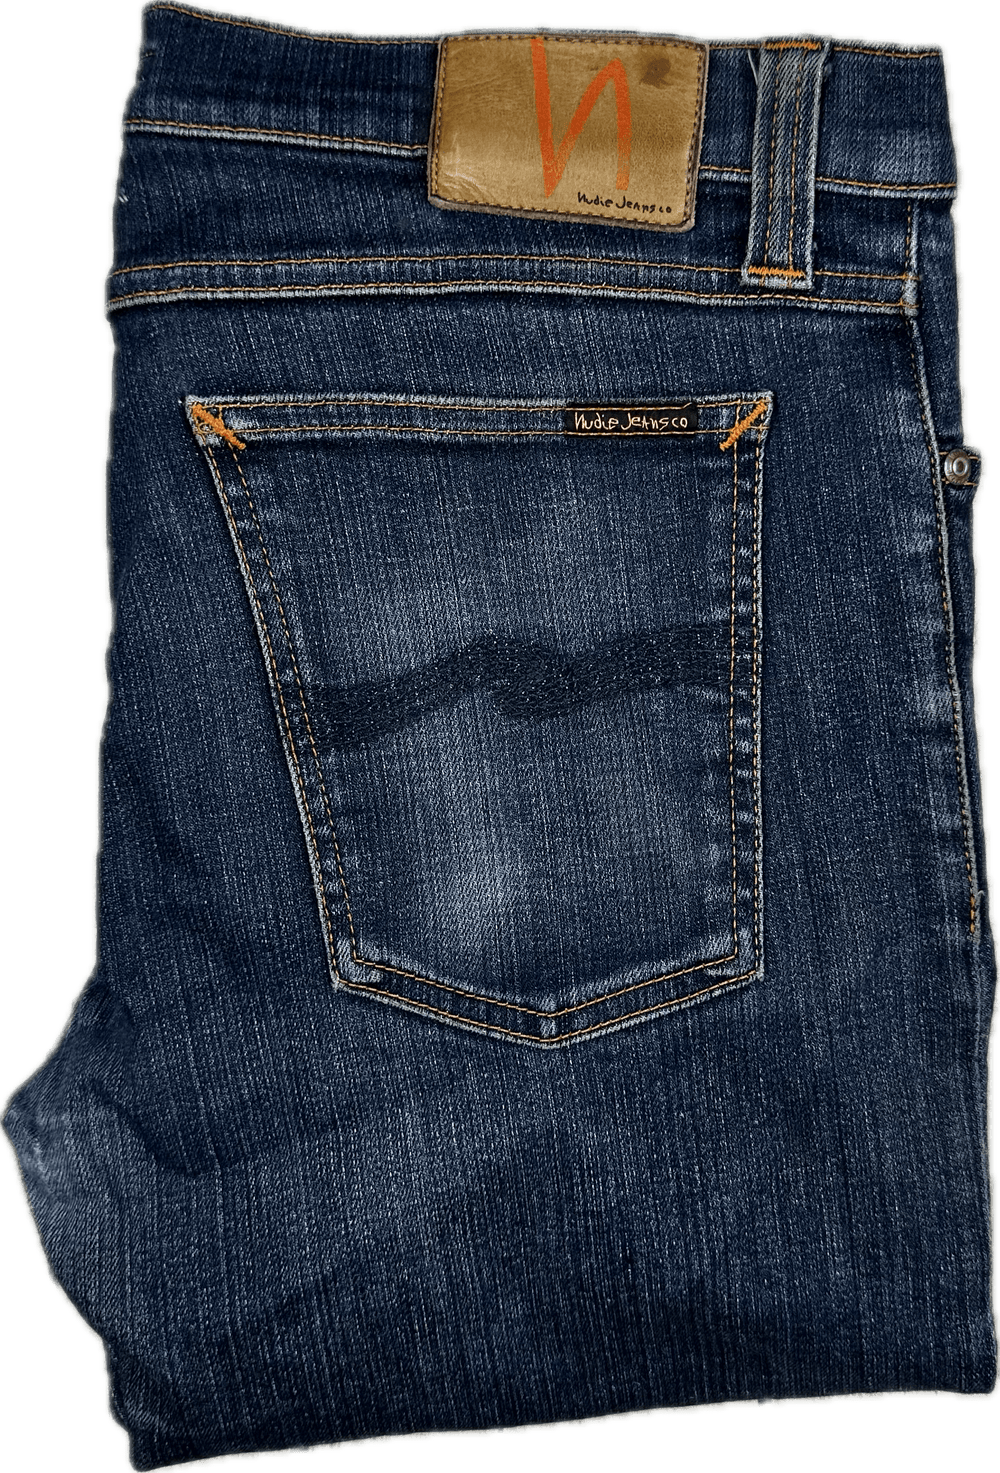 Nudie Jeans Co. 'Tube Kelly'Rinsed Strikey Jeans - Size 32/34 - Jean Pool